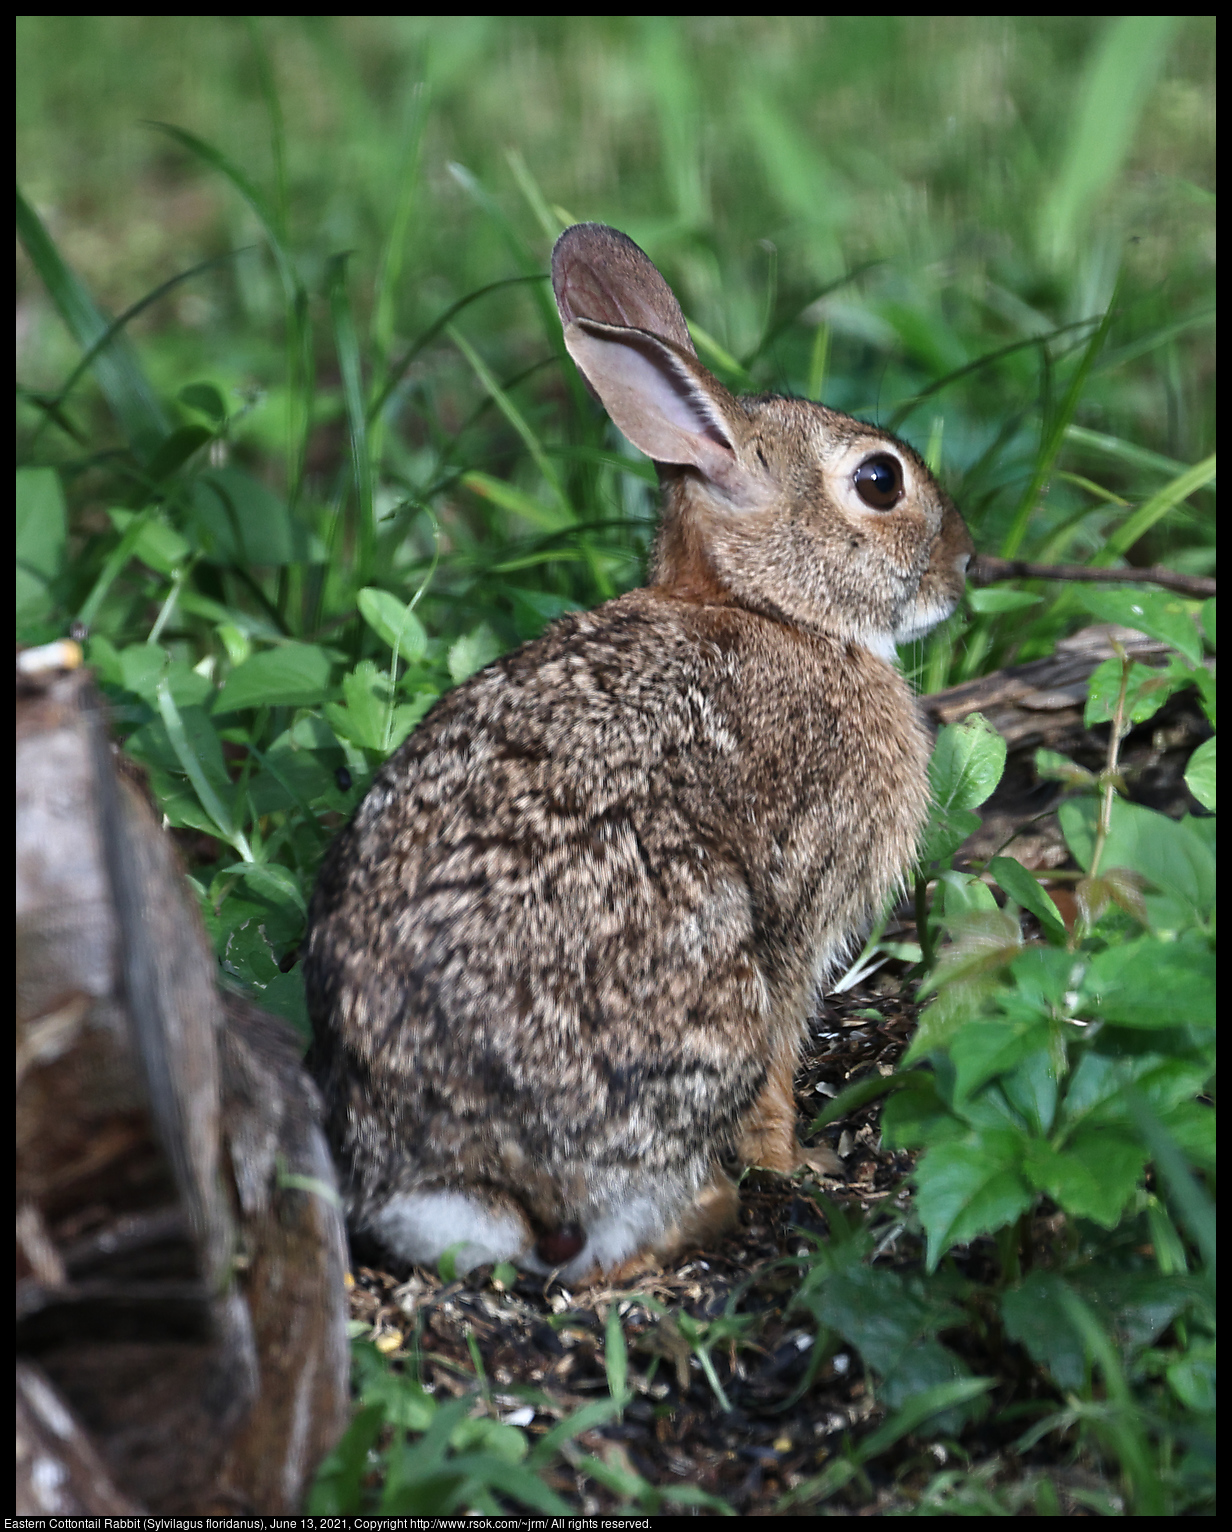 Eastern Cottontail Rabbit (Sylvilagus floridanus), June 13, 2021